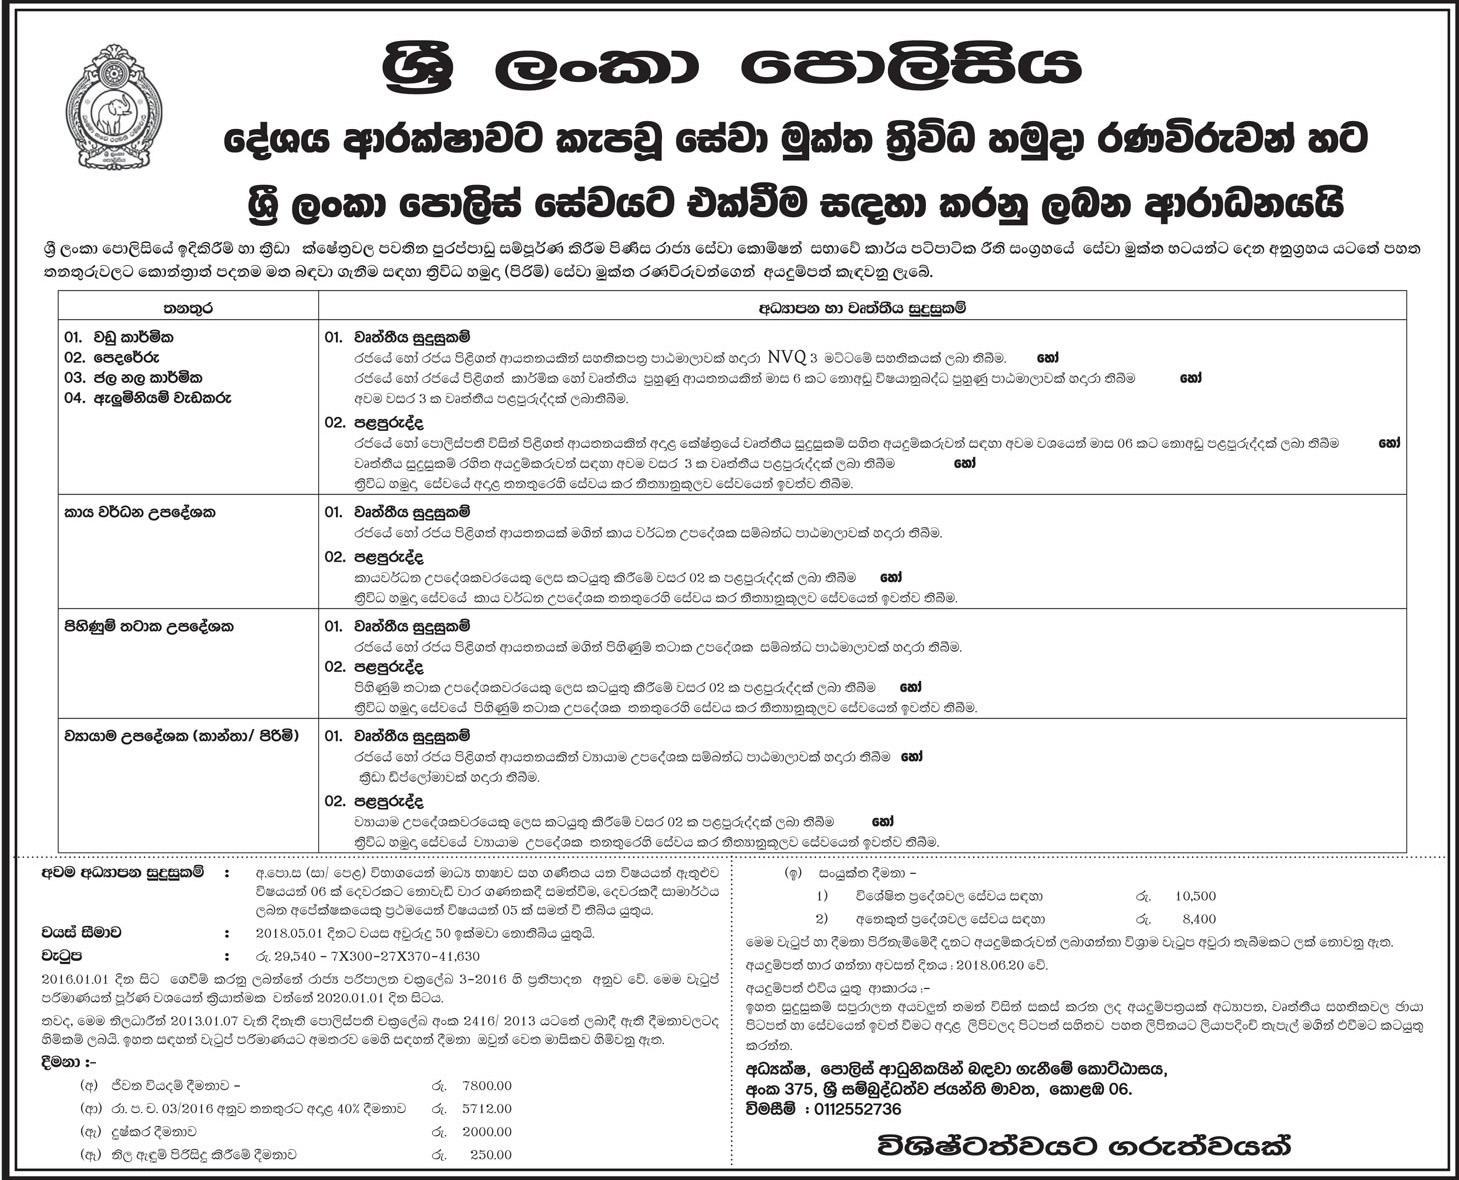 Technical Officer / Store Keeper / Quantity Surveyor / Draughtsman - Sri Lanka Police